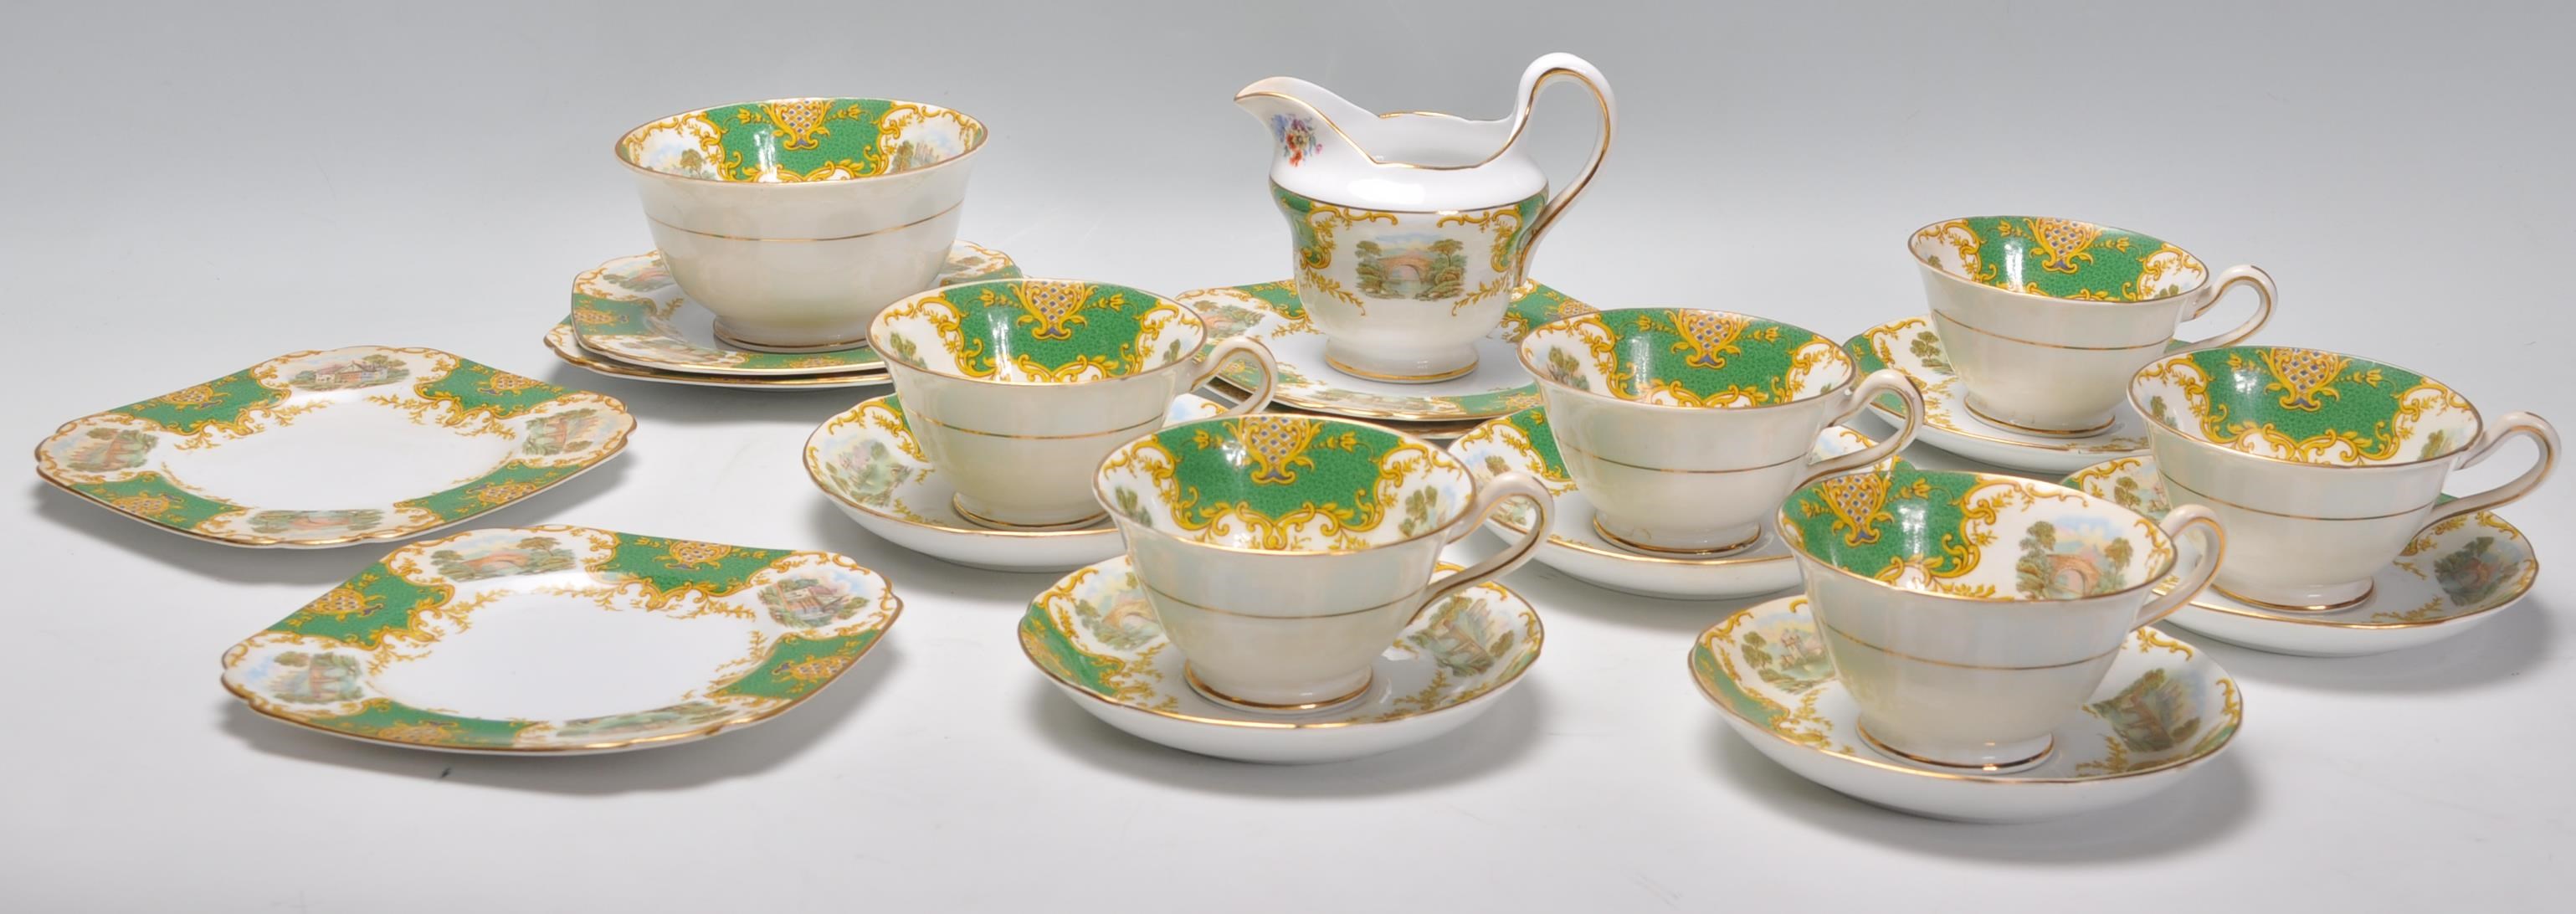 A good vintage 20th Century bone china tea service by Lawleys of Regent St having printed